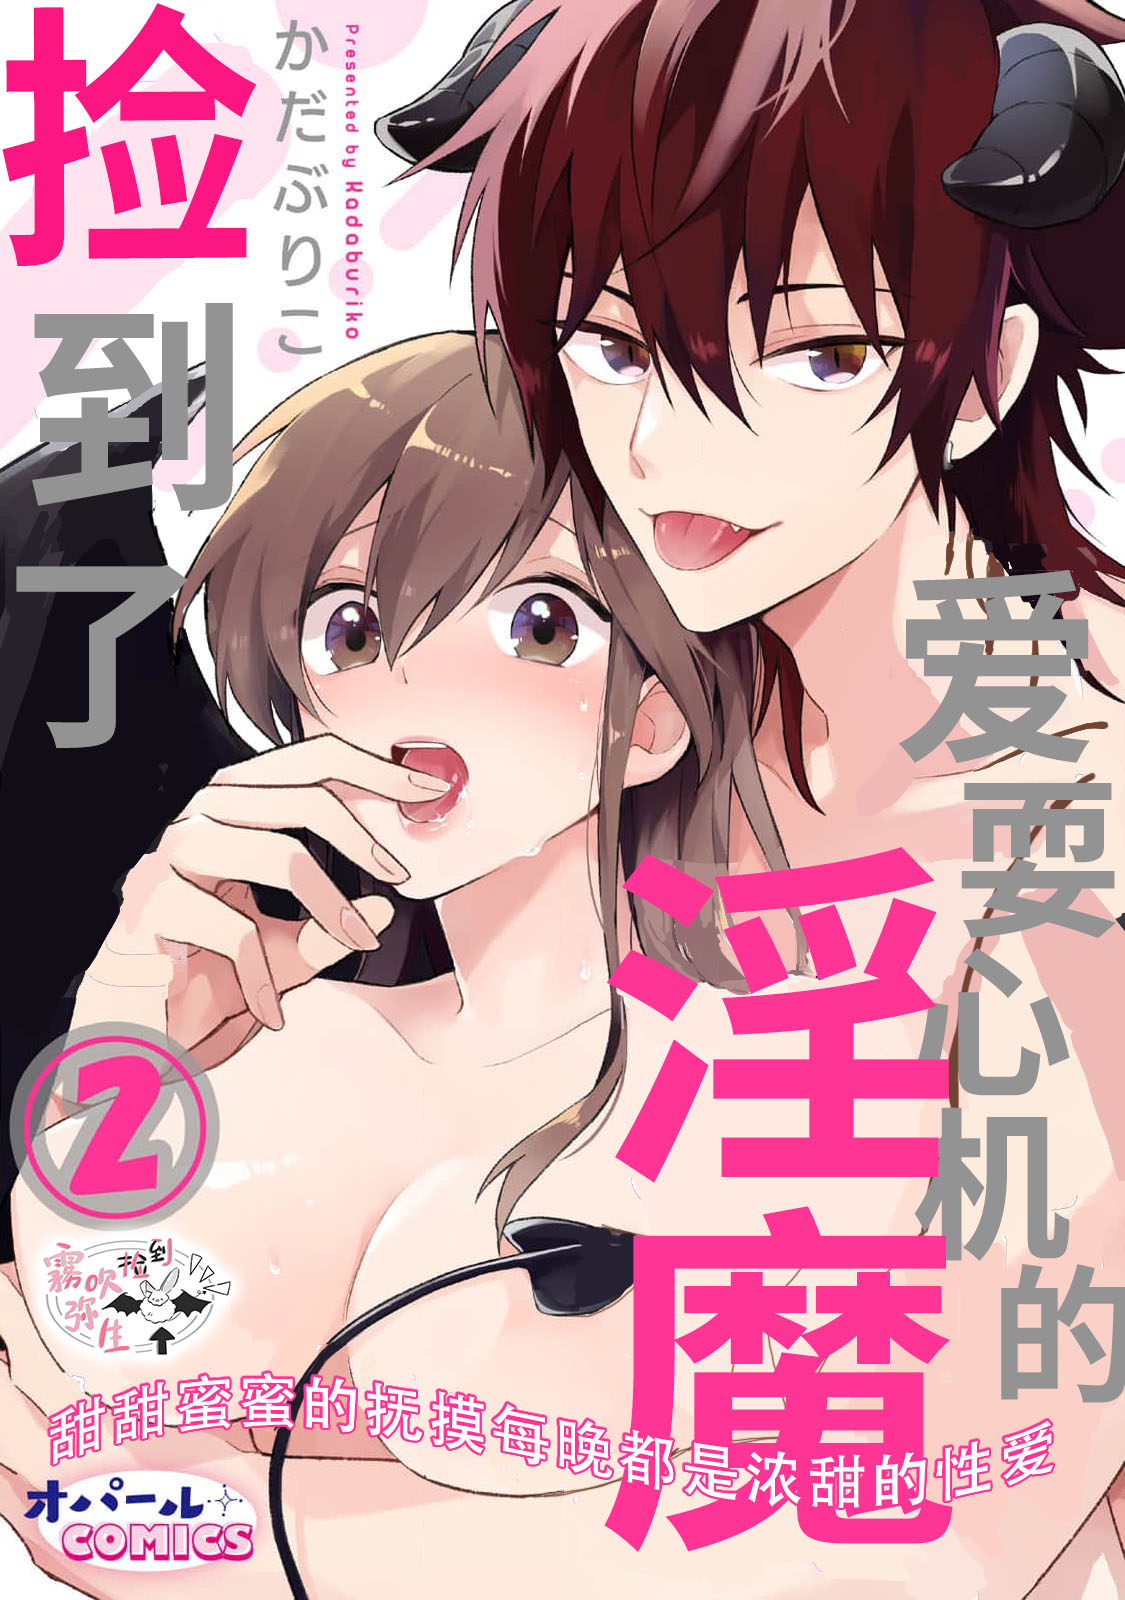 AoButa out of context, manga edition- volume 3, part two : r/ SeishunButaYarou